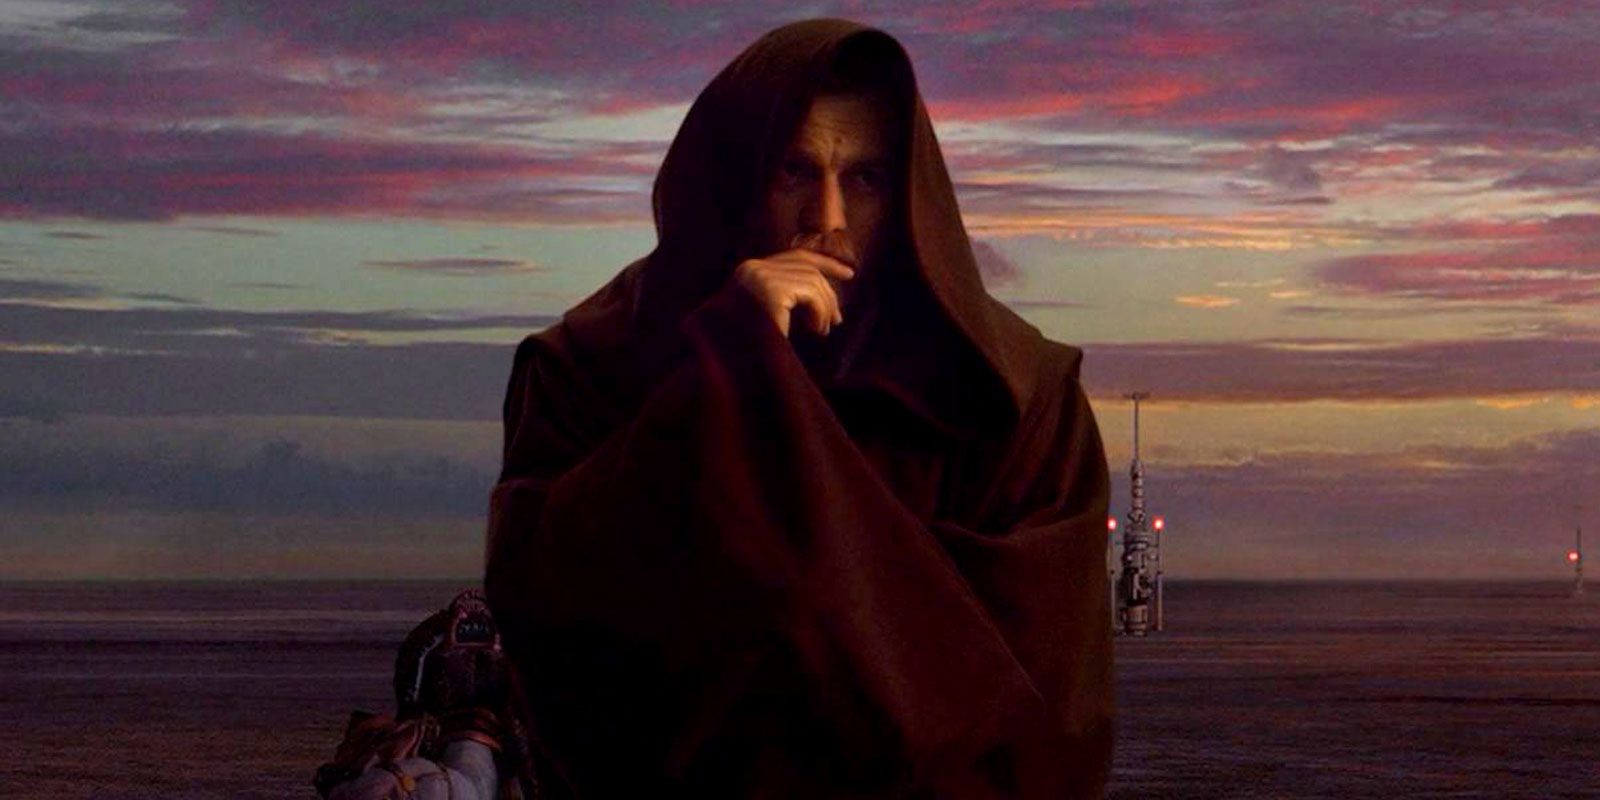 Obi-Wan Kenobi on Tatooine, wearing a hood, under colourful sunset clouds